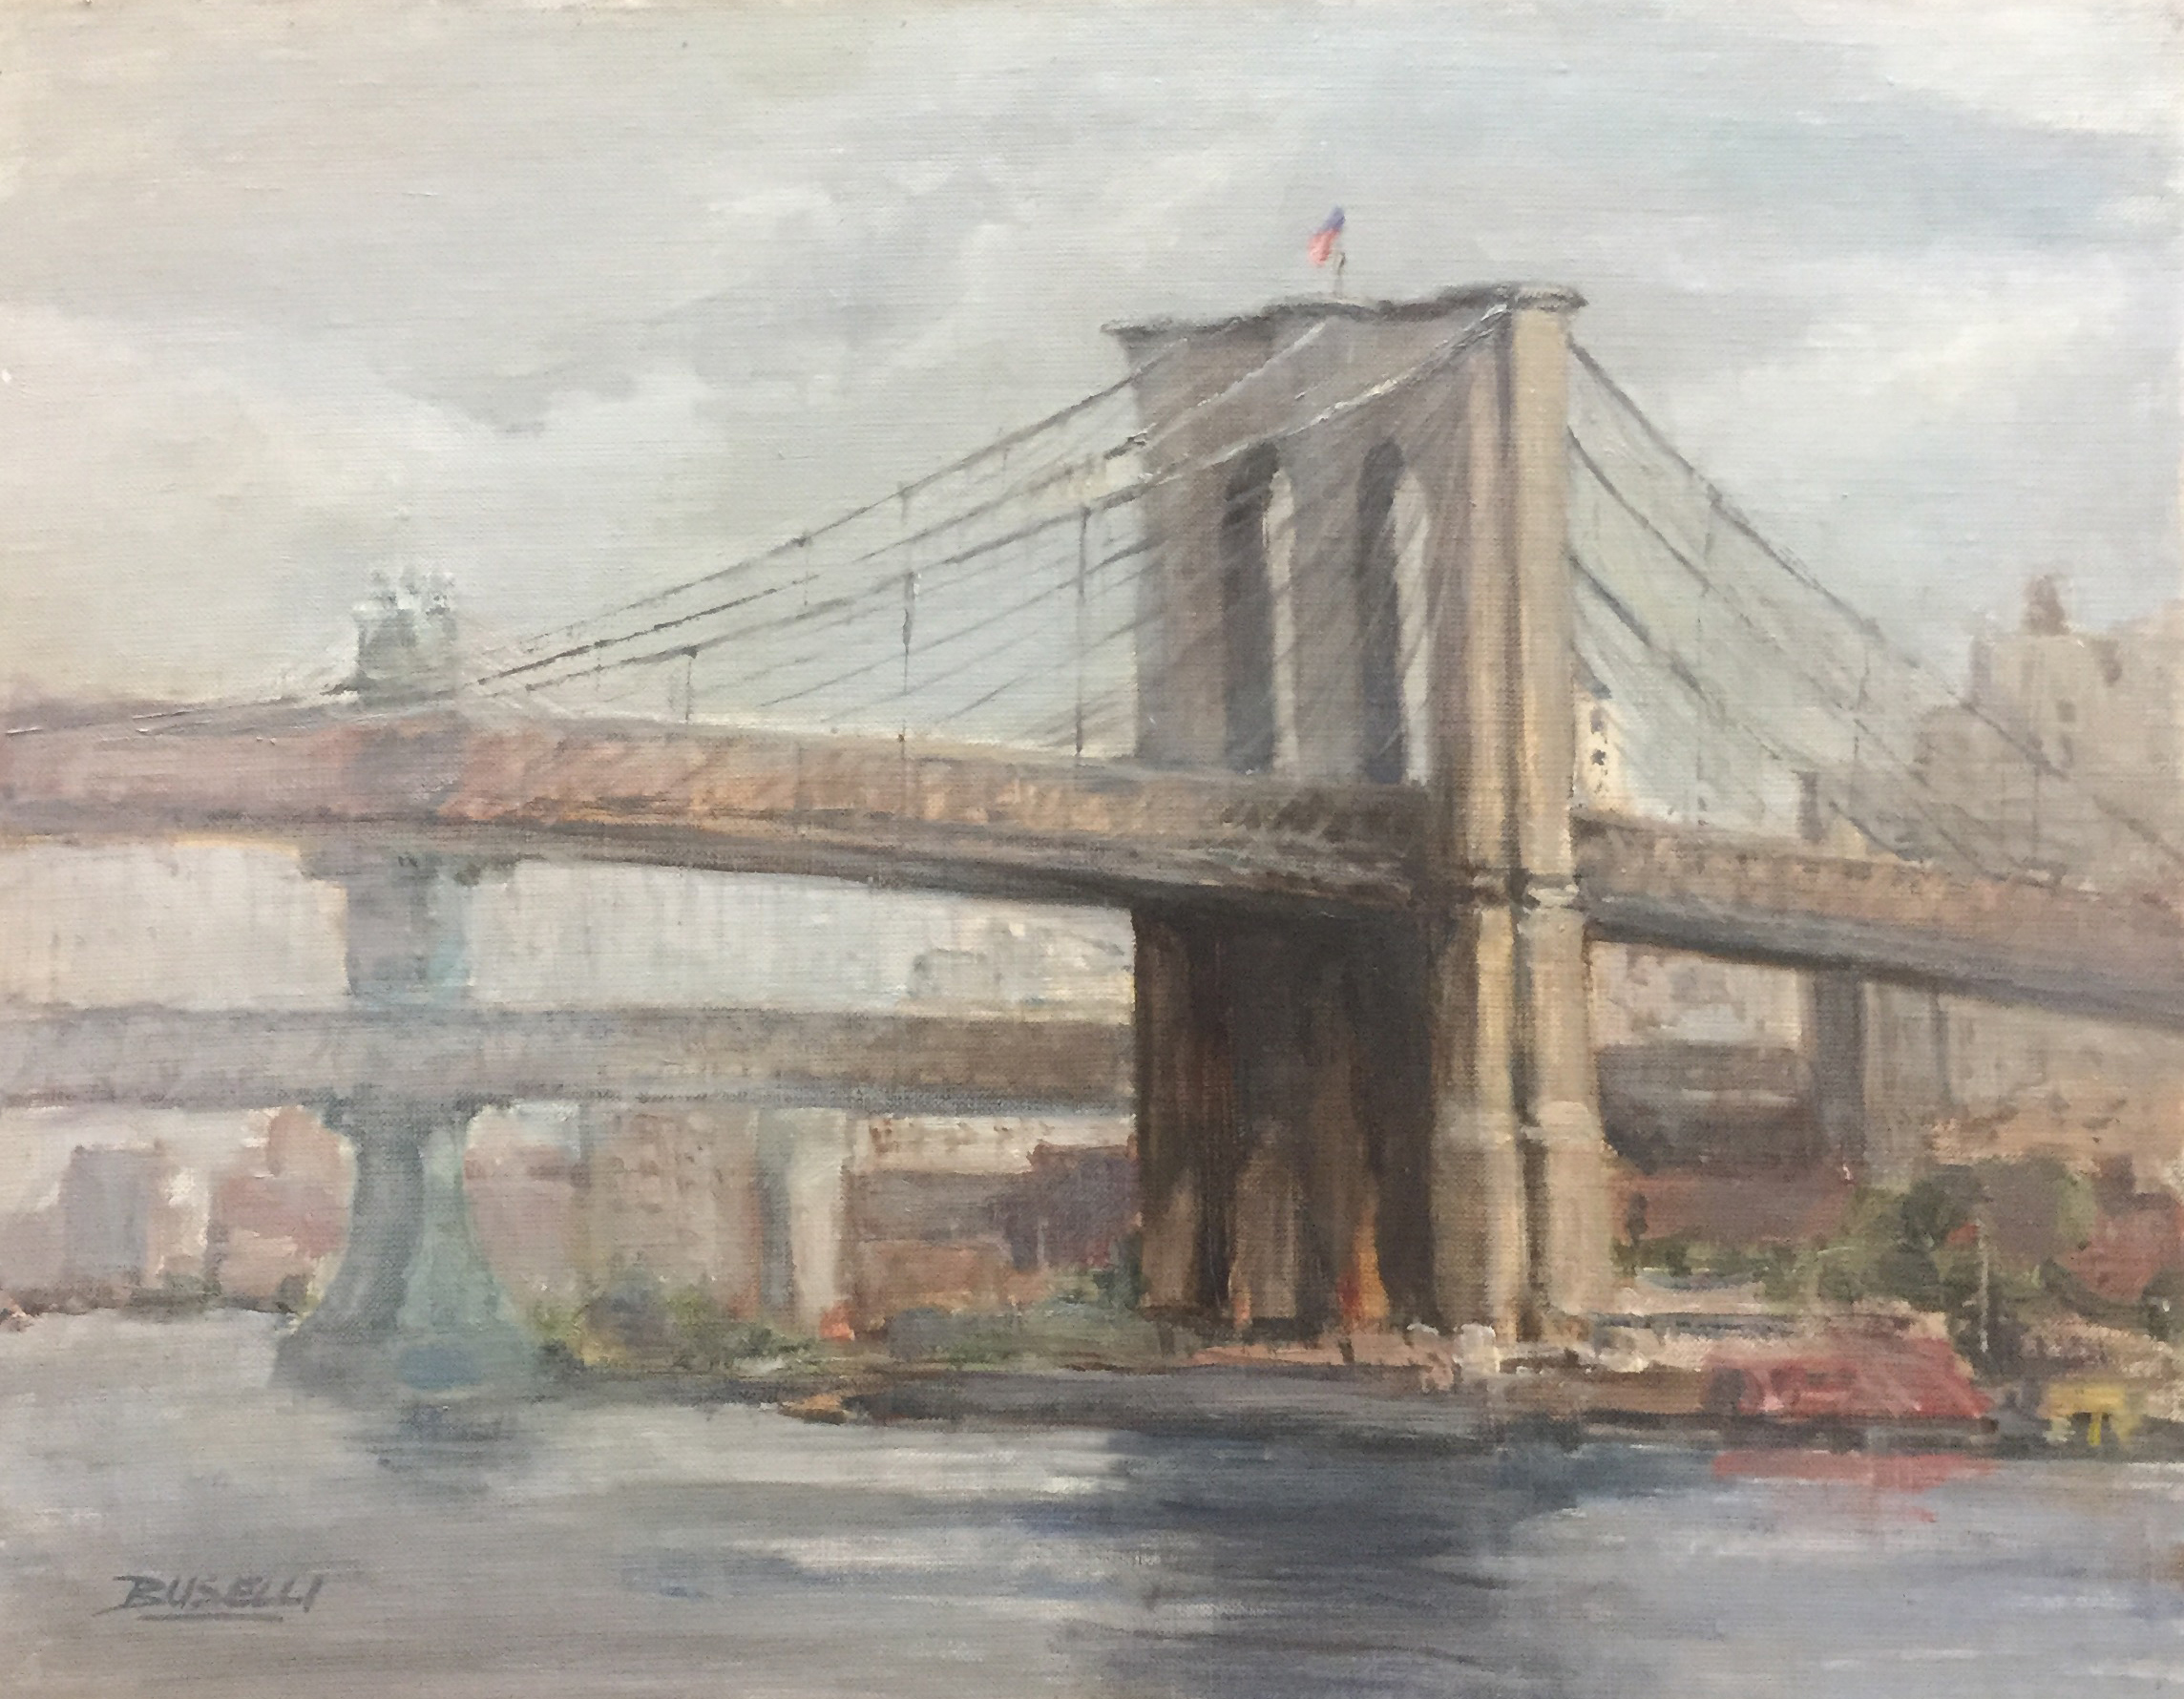  Overcast Day at the Brooklyn Bridge  oil on linen | 11" x 14" 